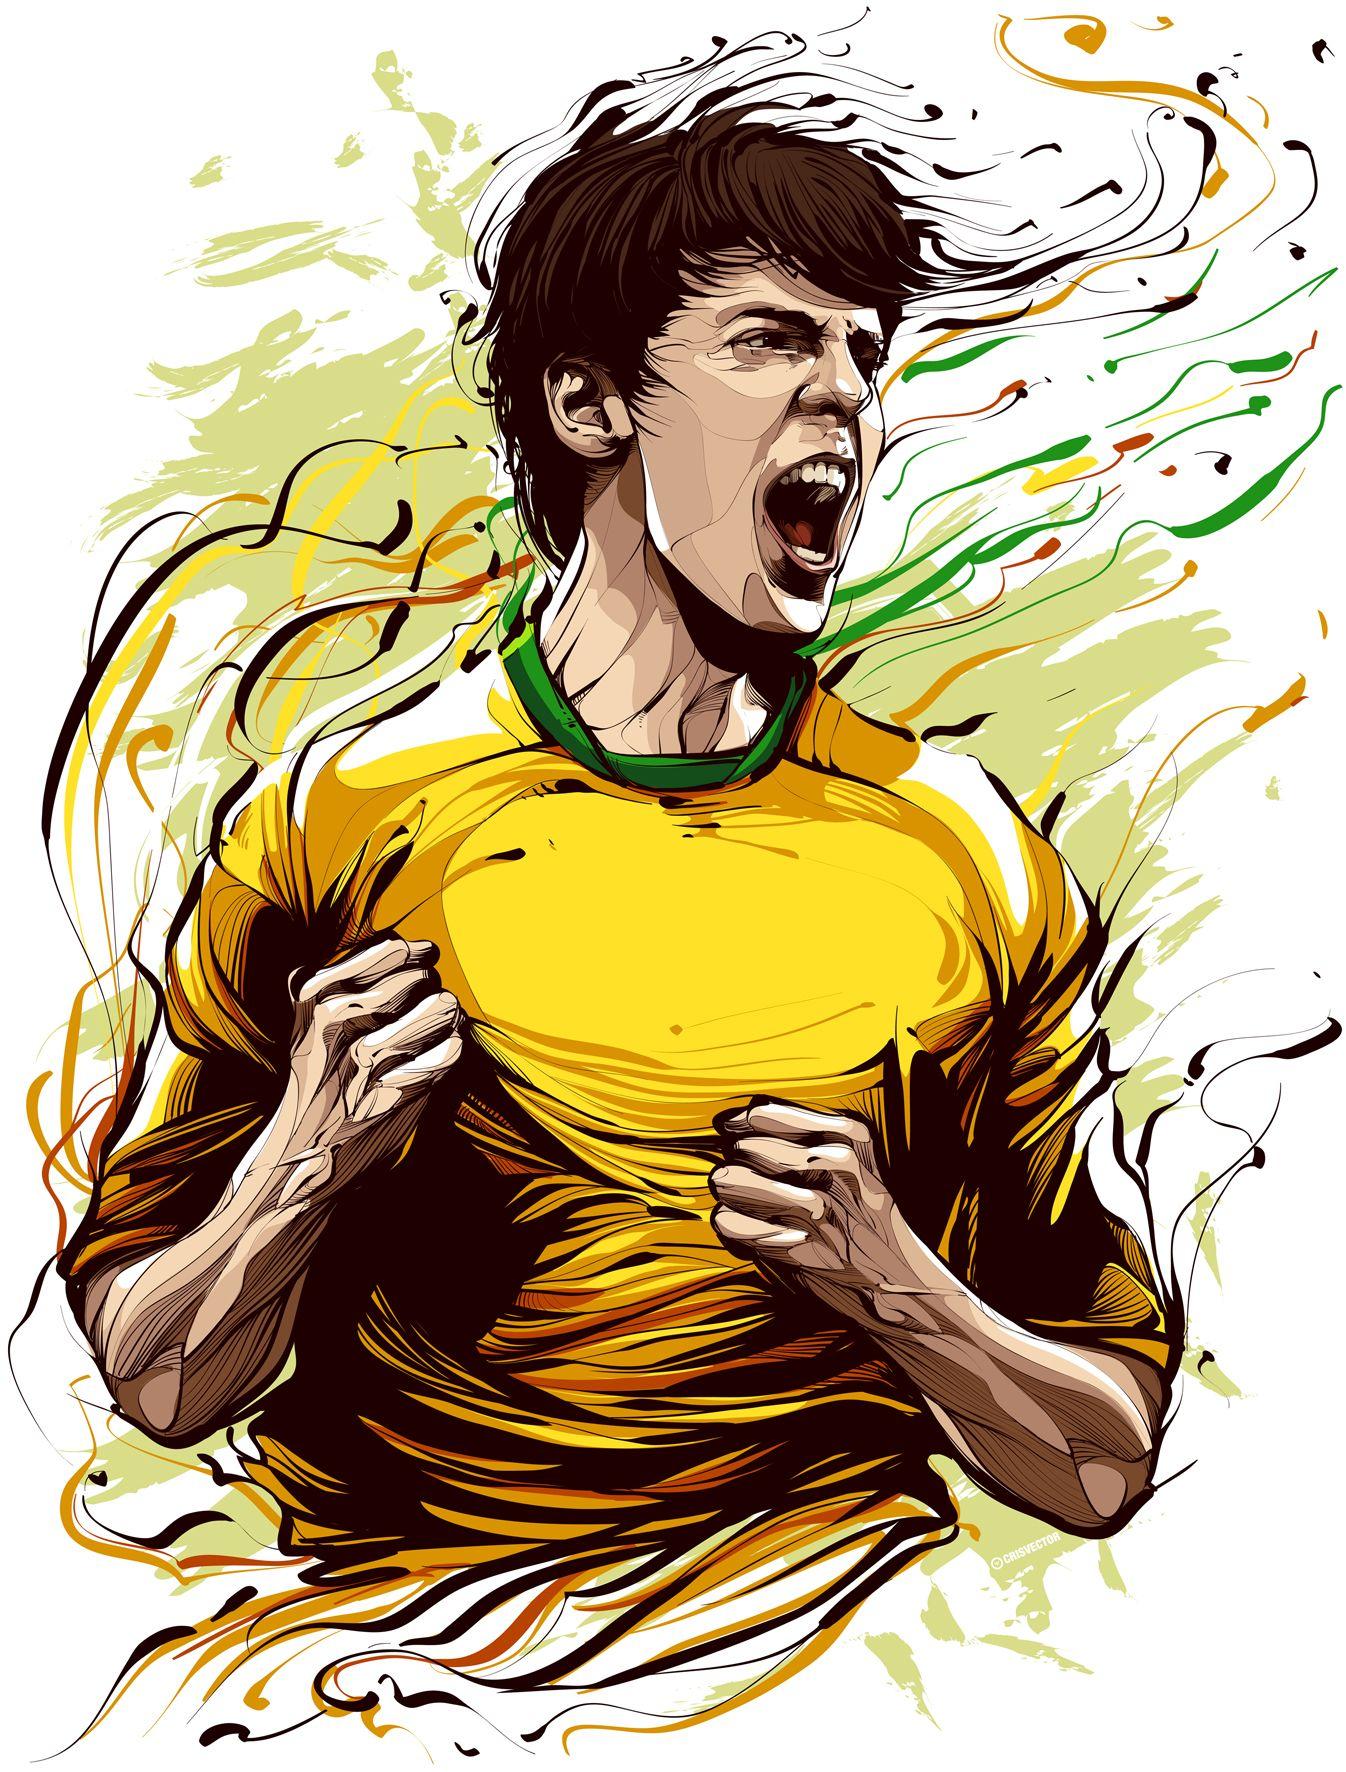 Cristiano Siqueira Football Player Illustration